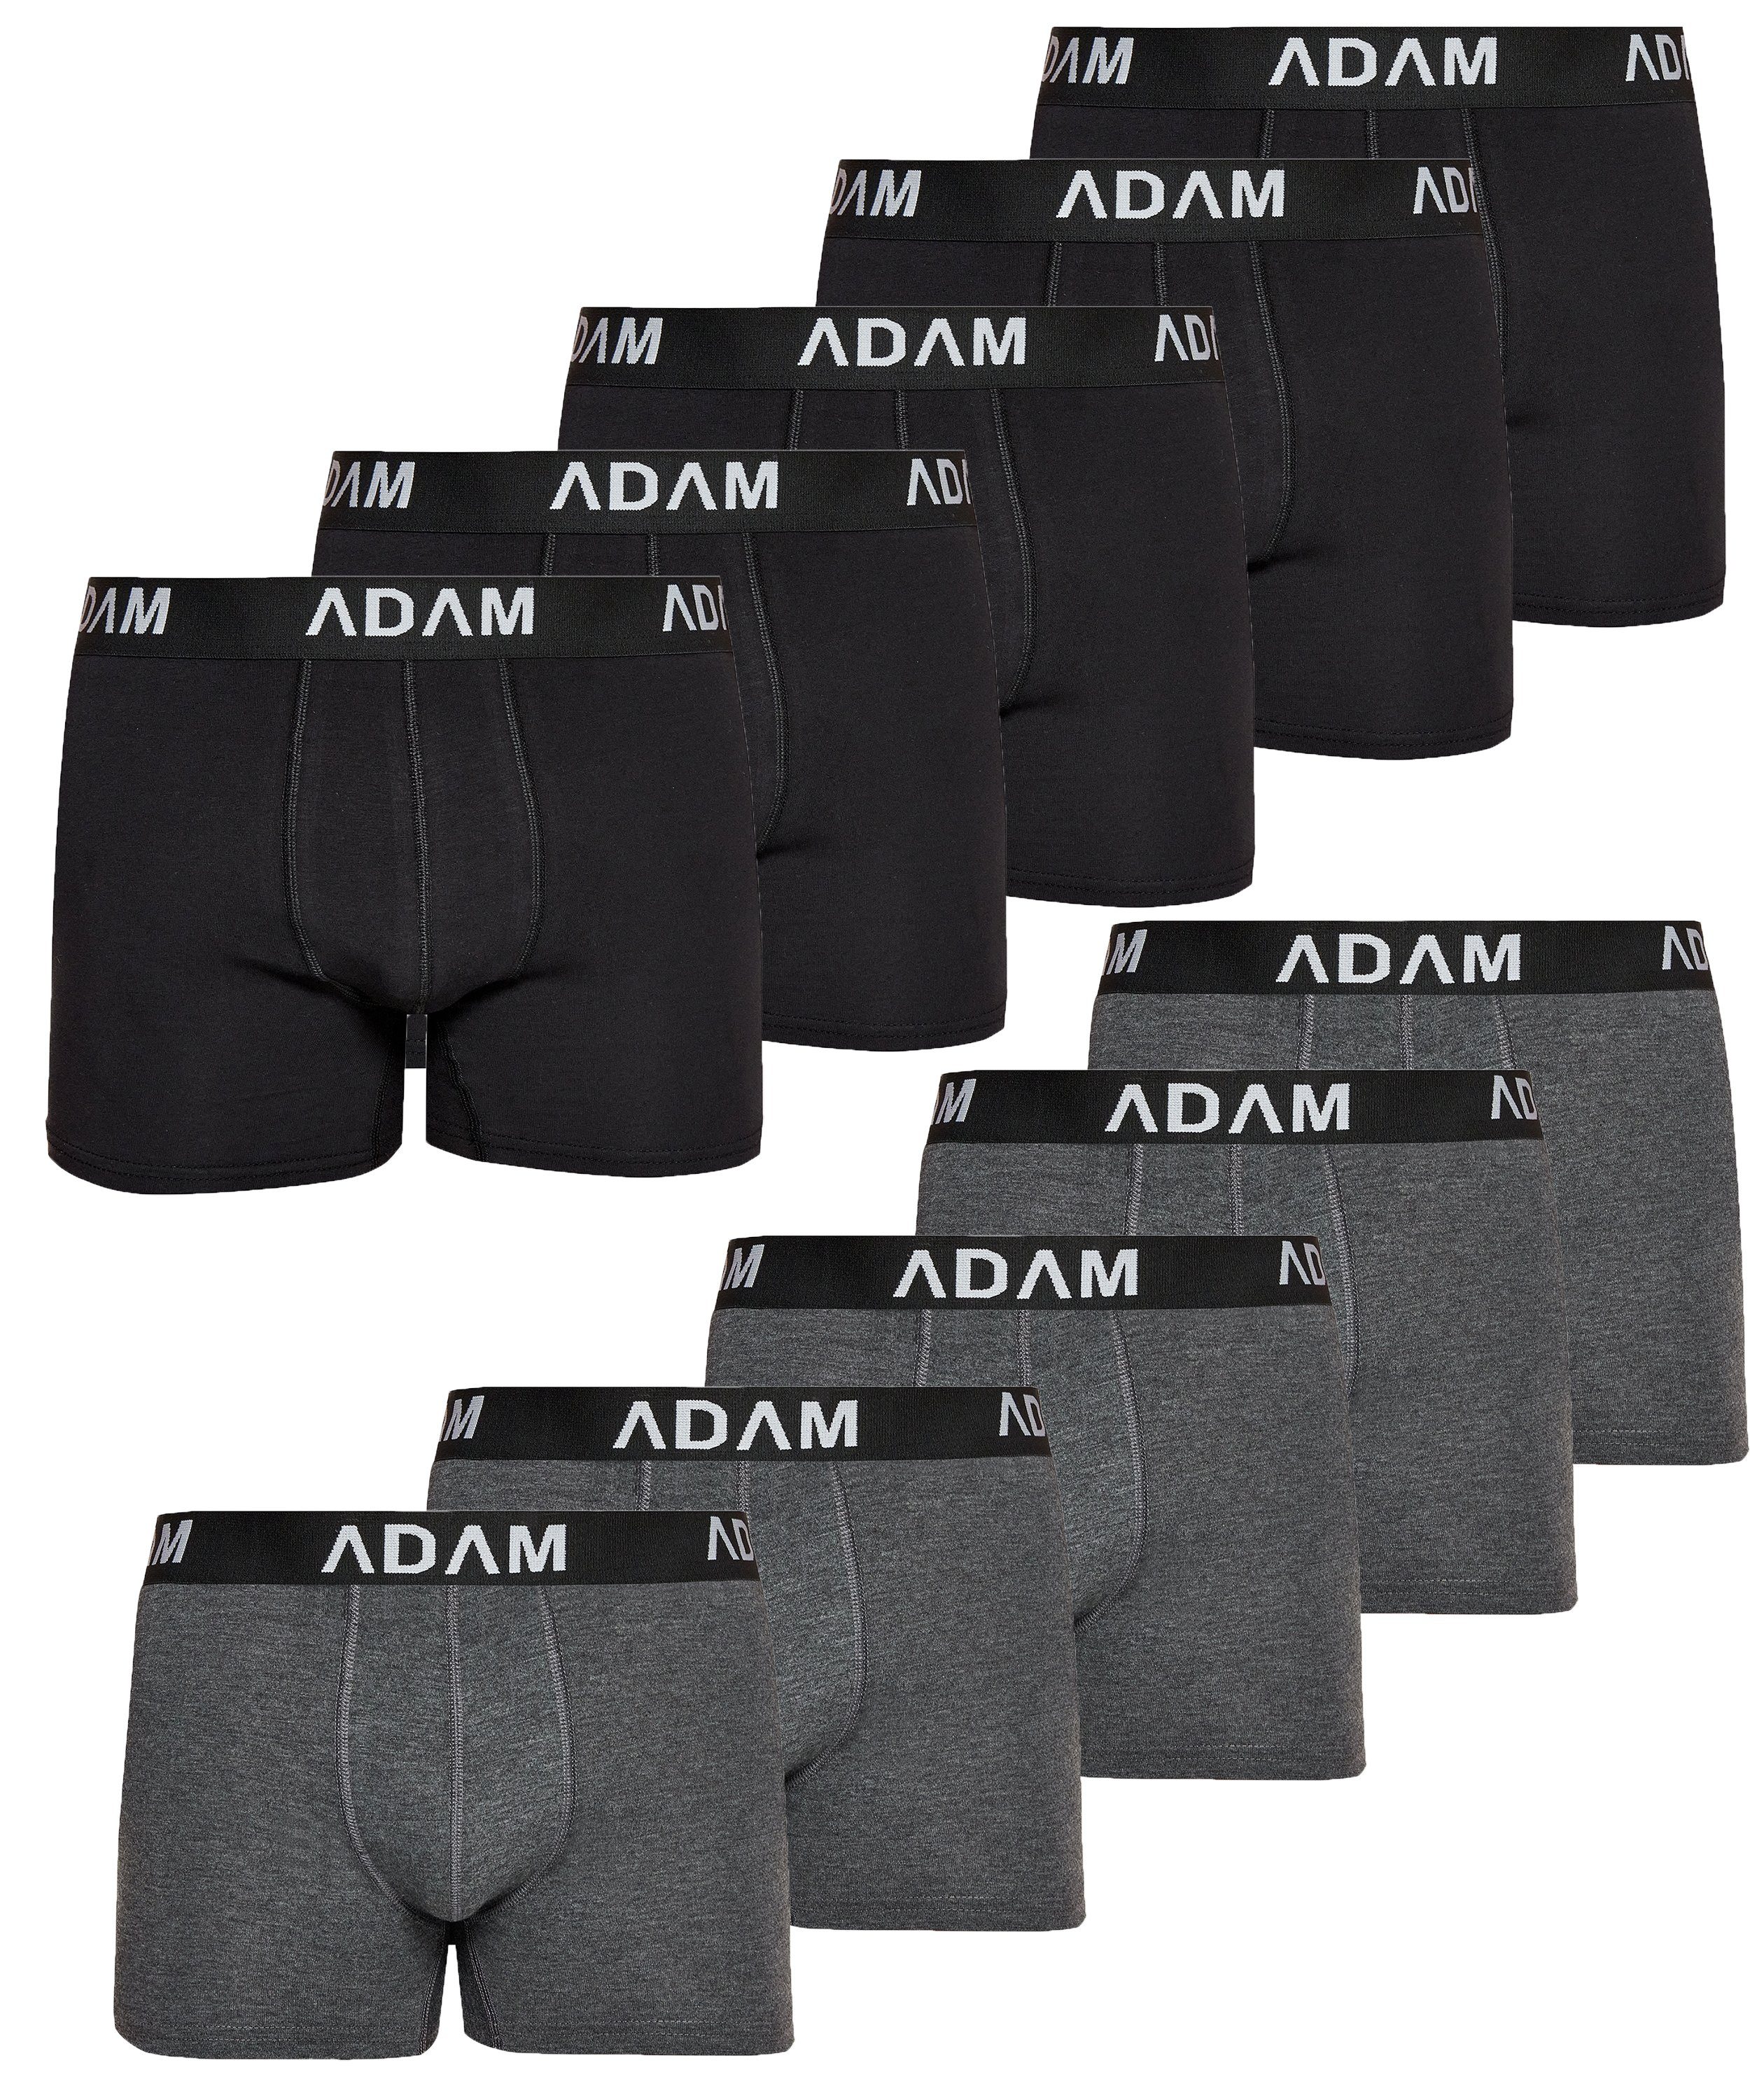 ADAM JEANS Boxershorts Boxer-1 (10-St., 6er Set, 8er Set, 10er Set, 12er Set) Boxershorts Herren Boxer Shorts Männer Unterhosen Trunks Underwear 10er Set Box-C